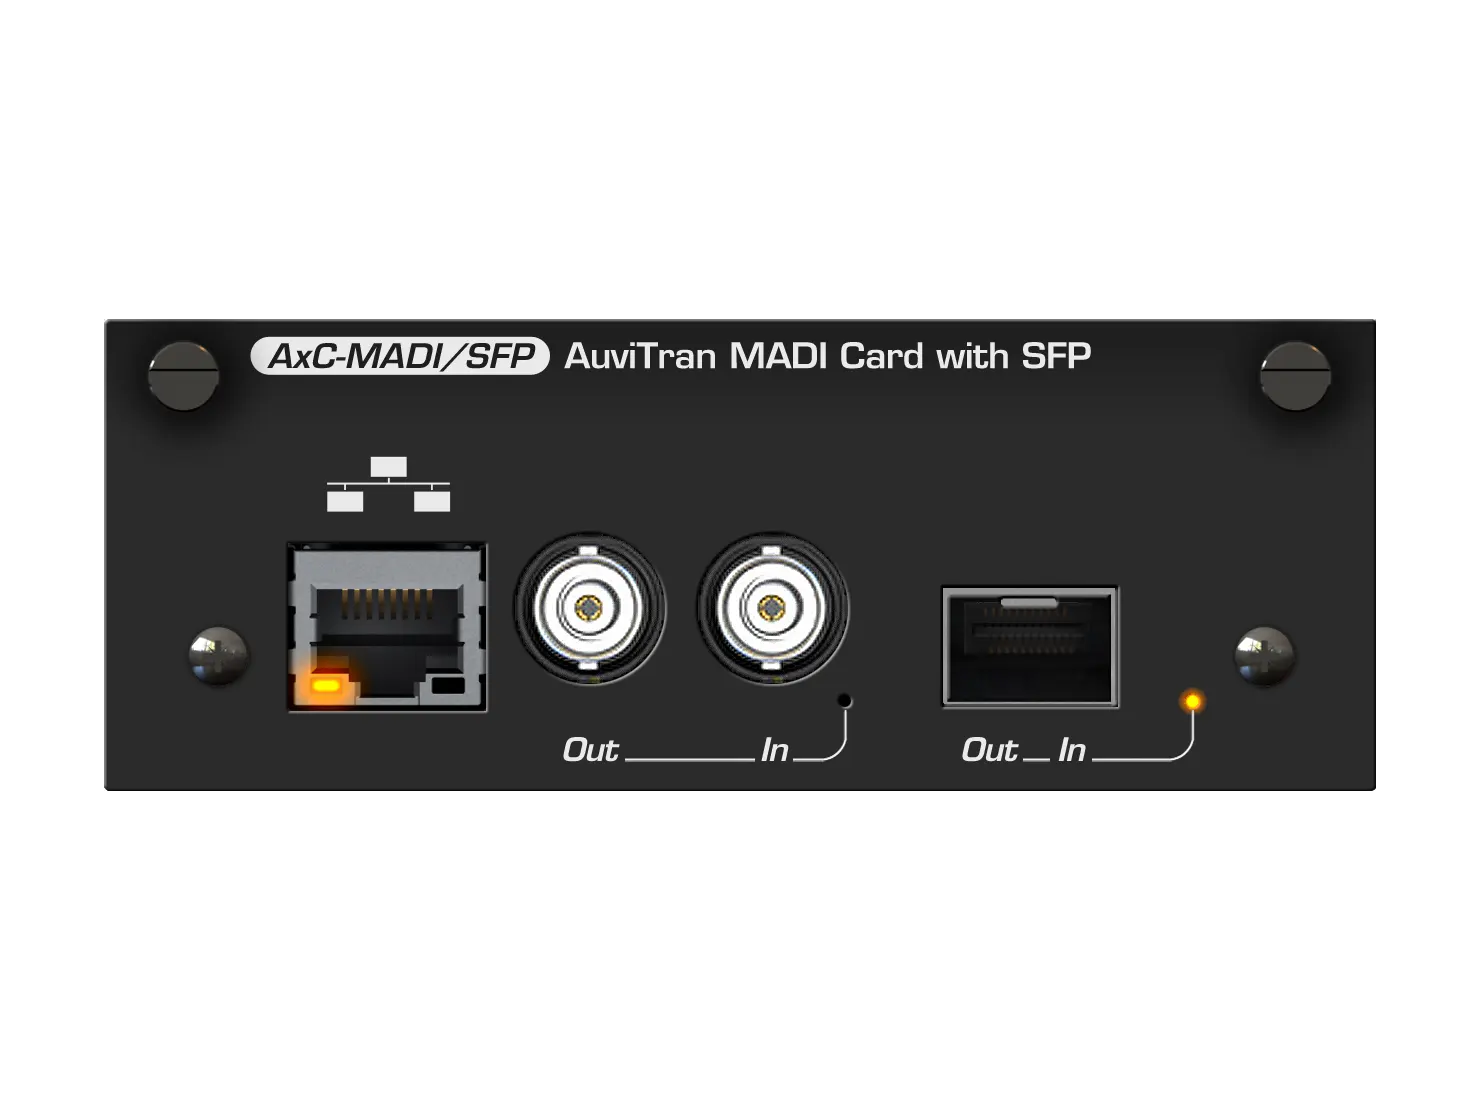 AxC-MADI/SFP